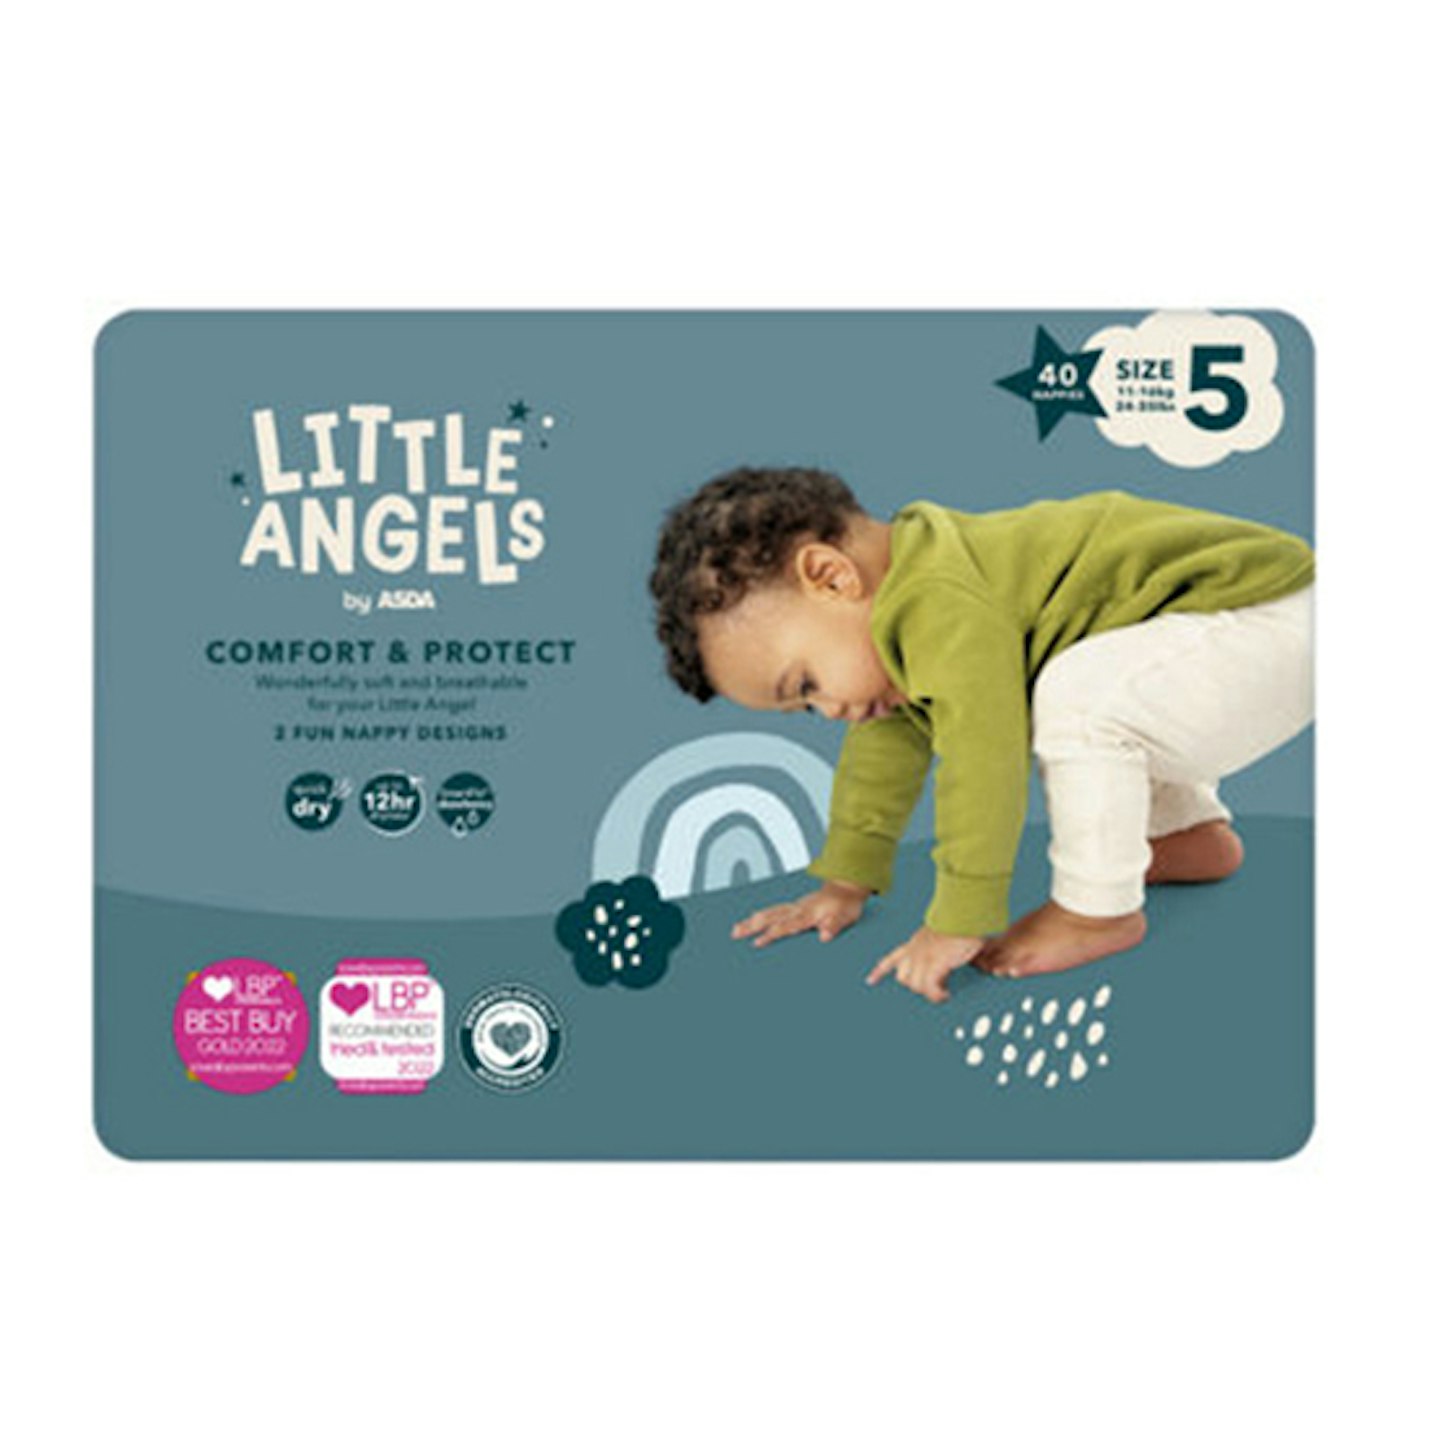 asda little angels nappies awards24